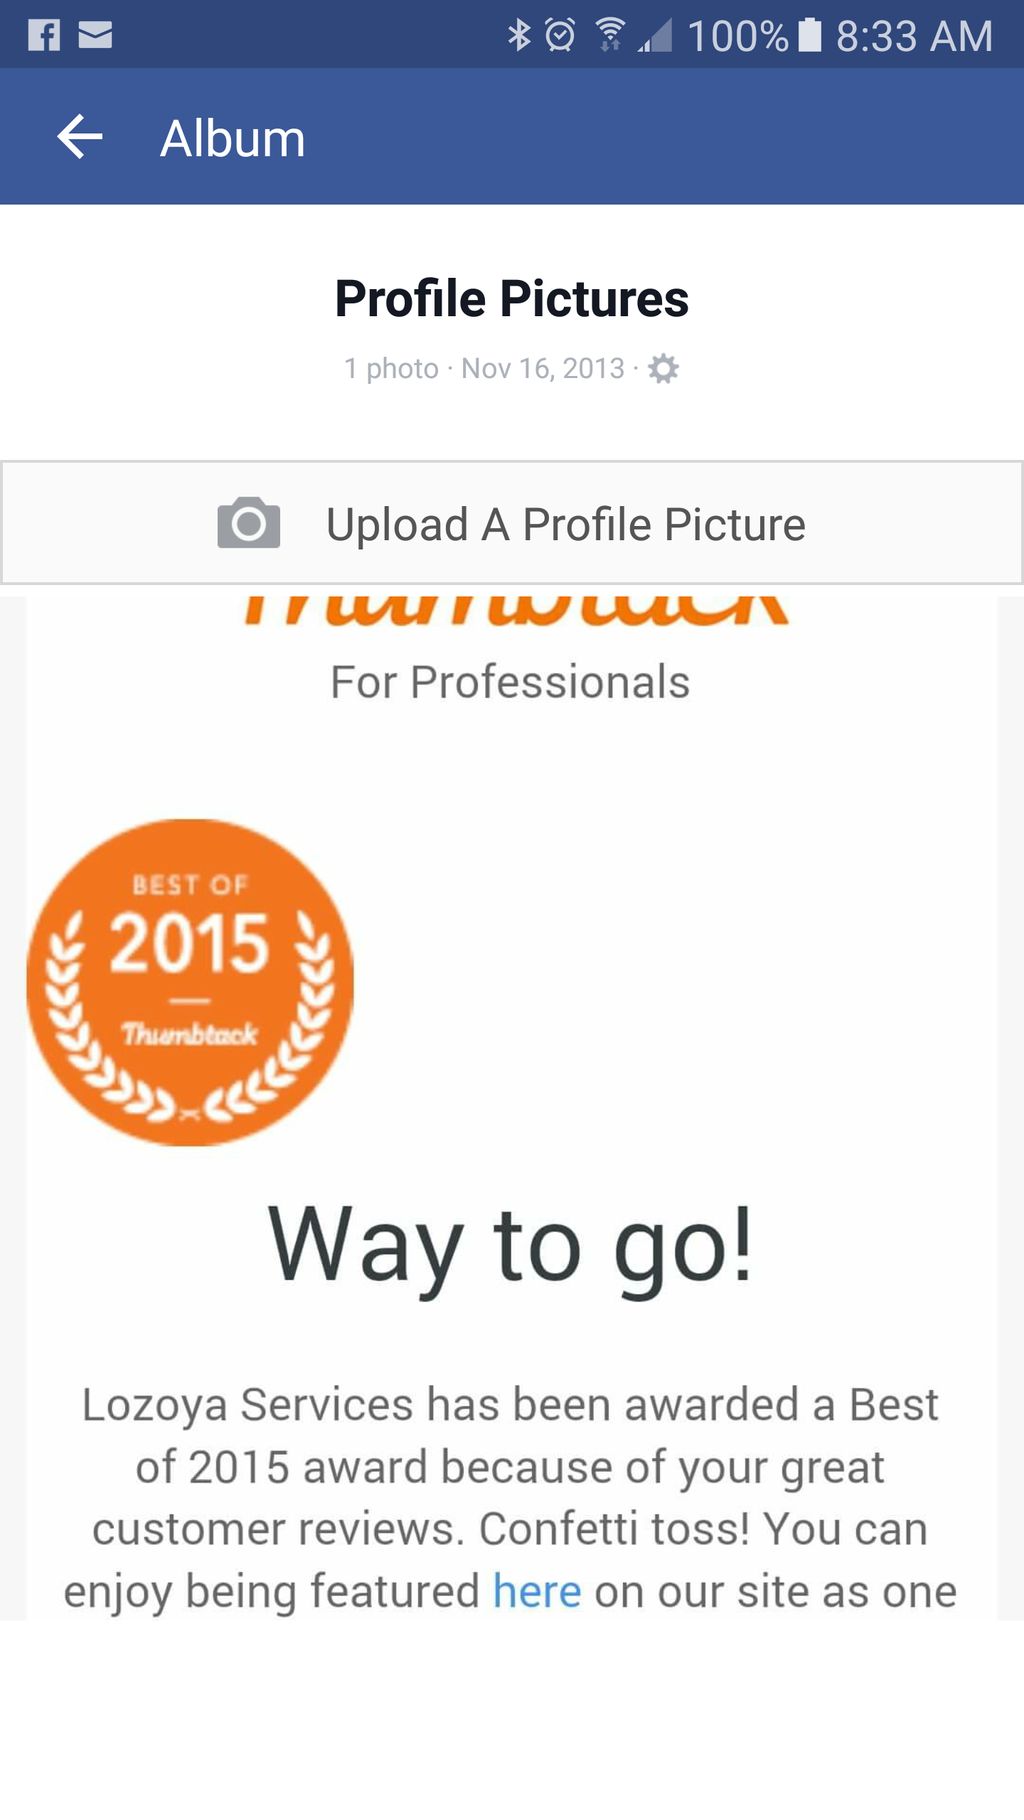 Lozoya Services